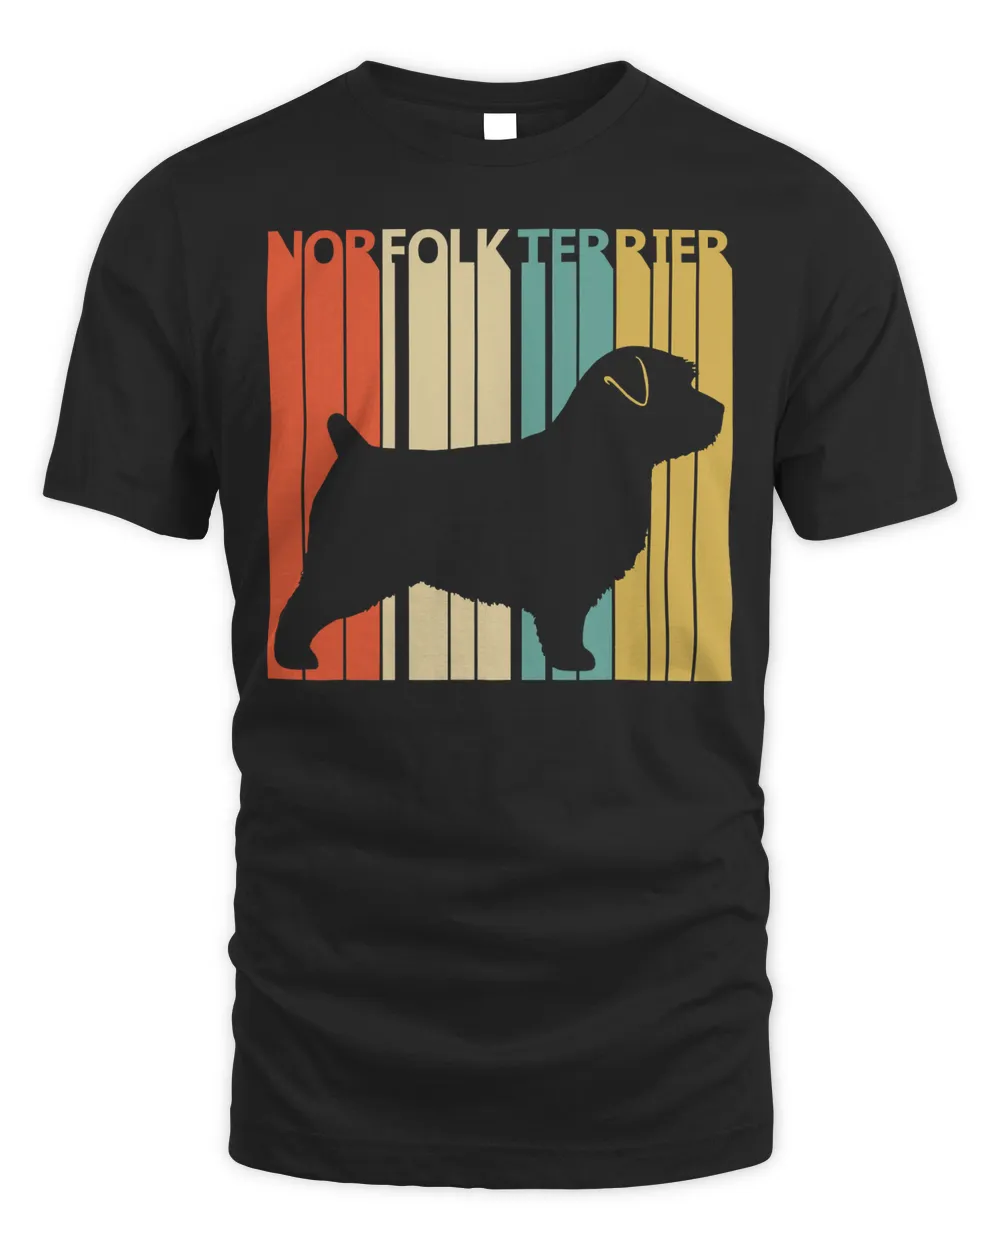 Vintage Norfolk Terrier Dog T-shirt - Norfolk Terrier Tshirt